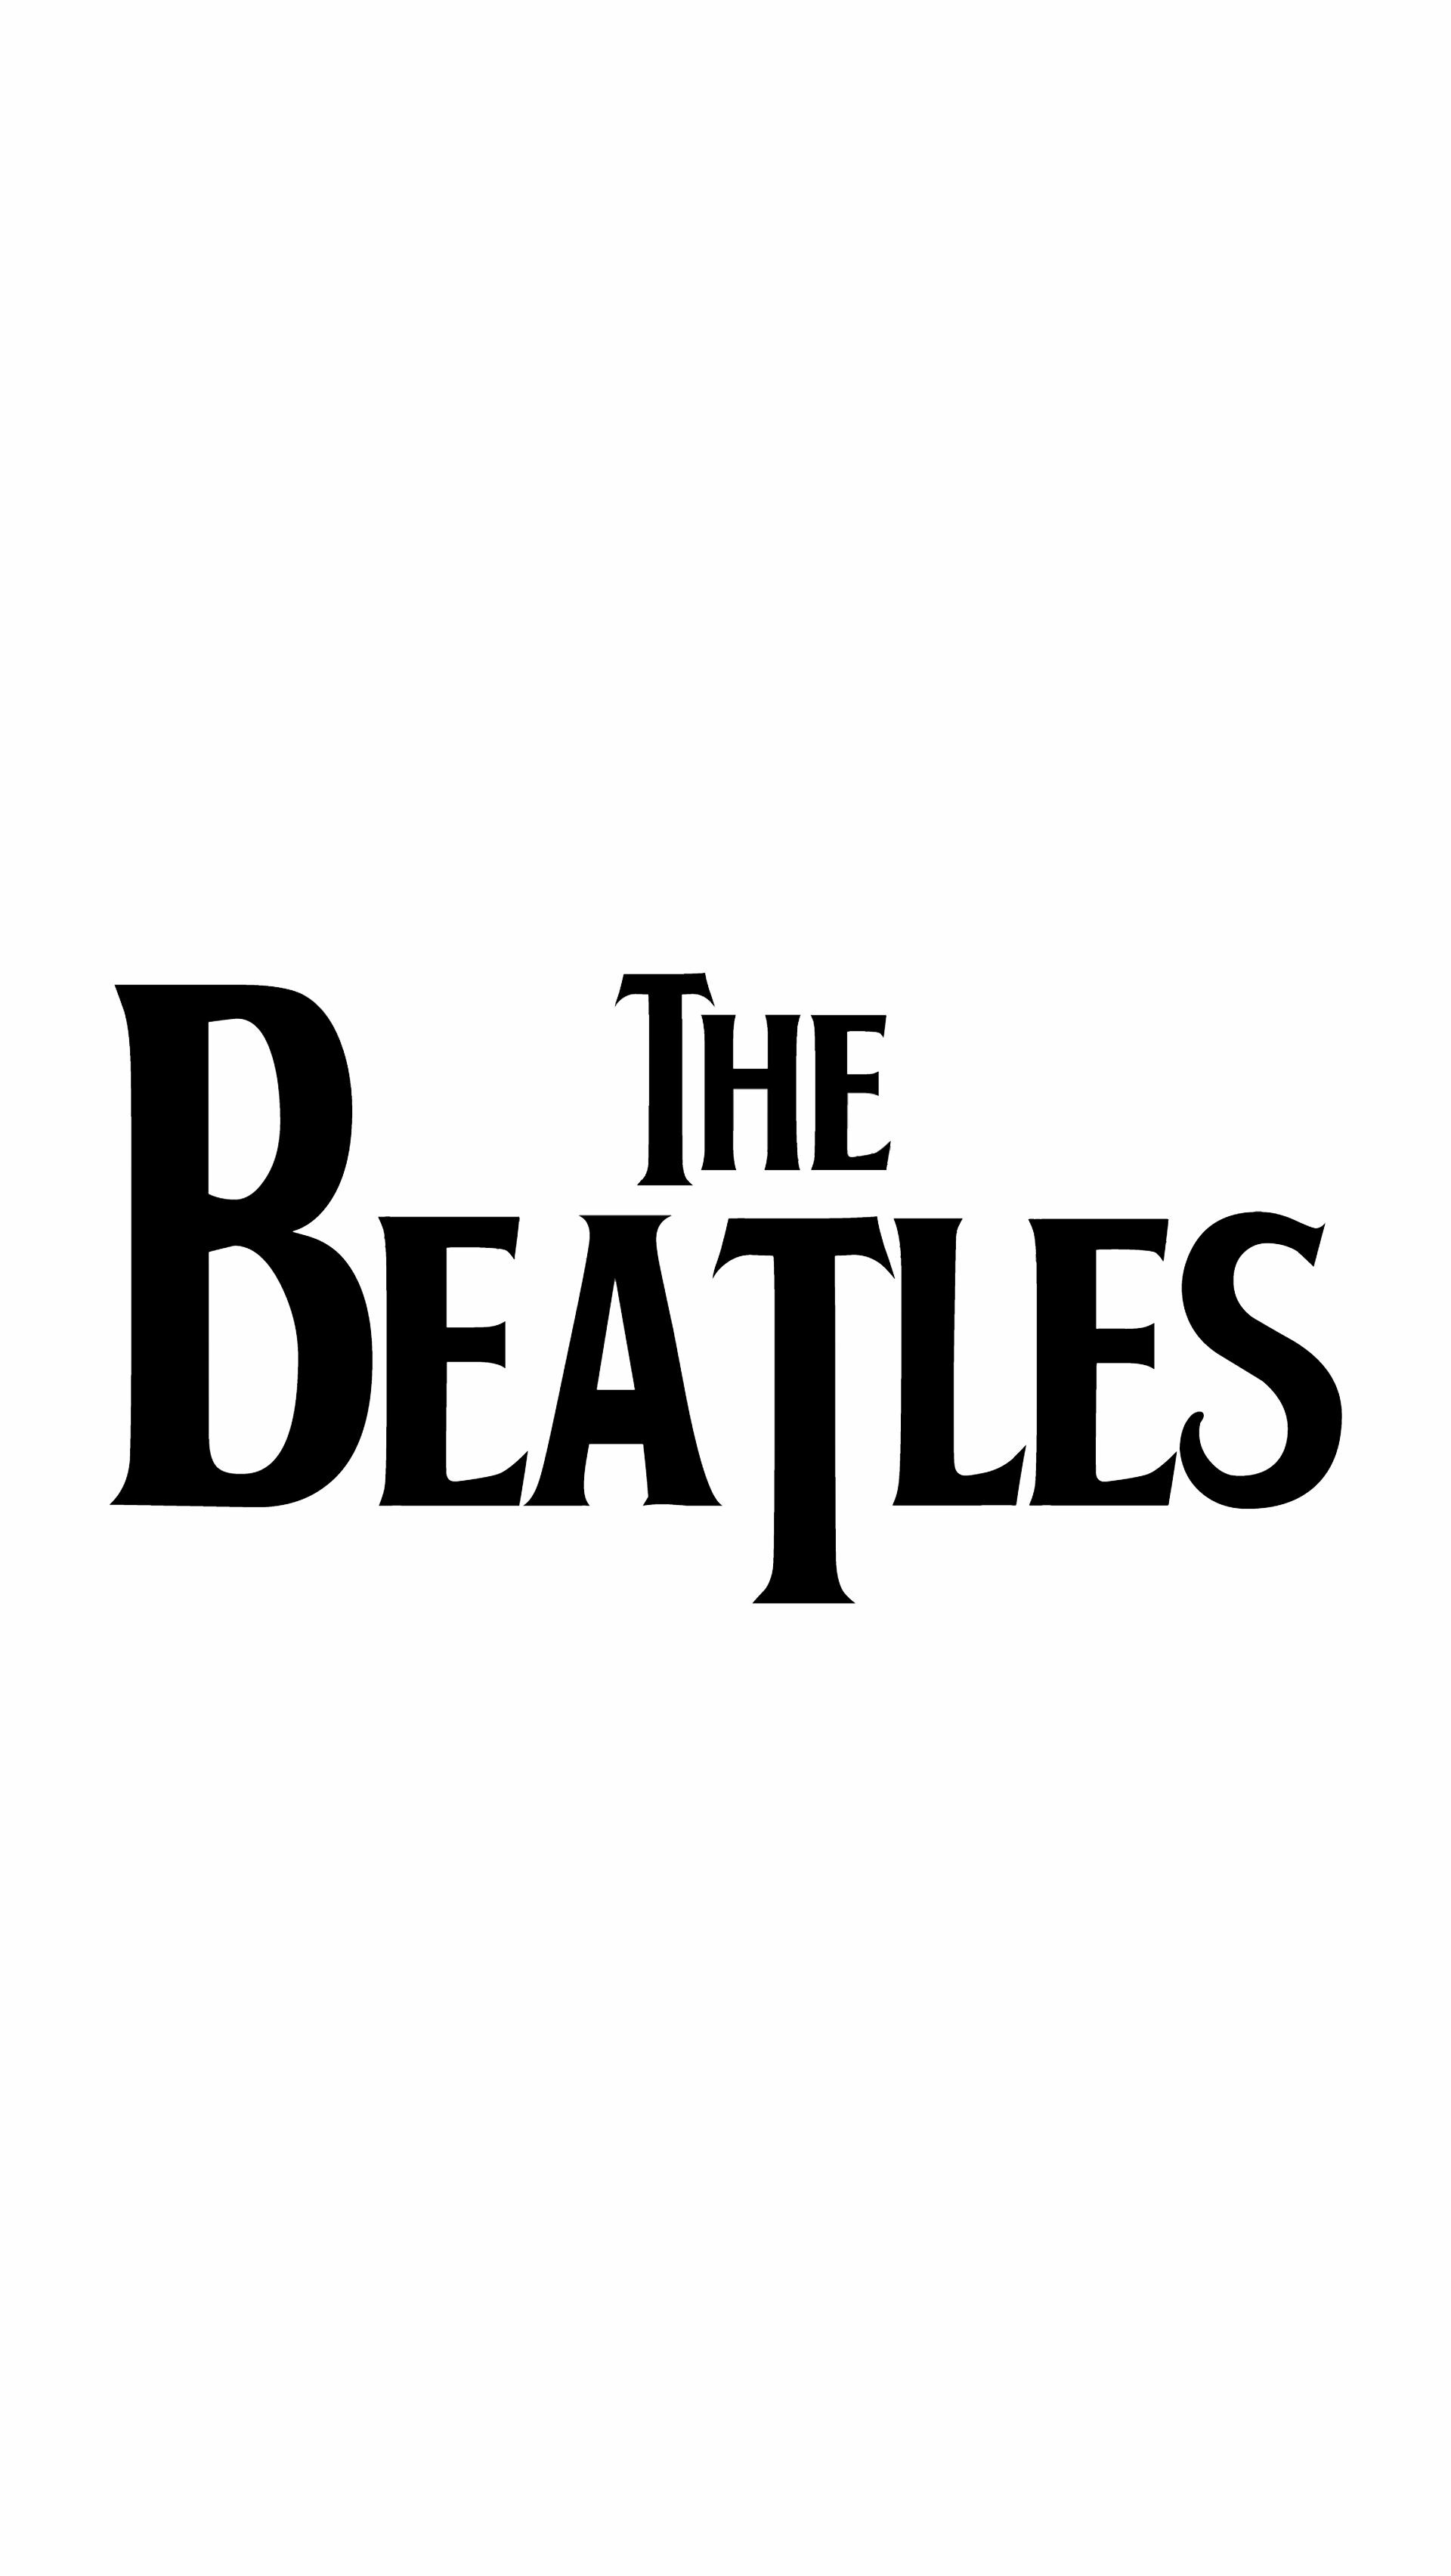 The Beatles Logo Vinyl Decal Sticker Music Rock Band - Buy 2 Get 1 FREE! |  eBay